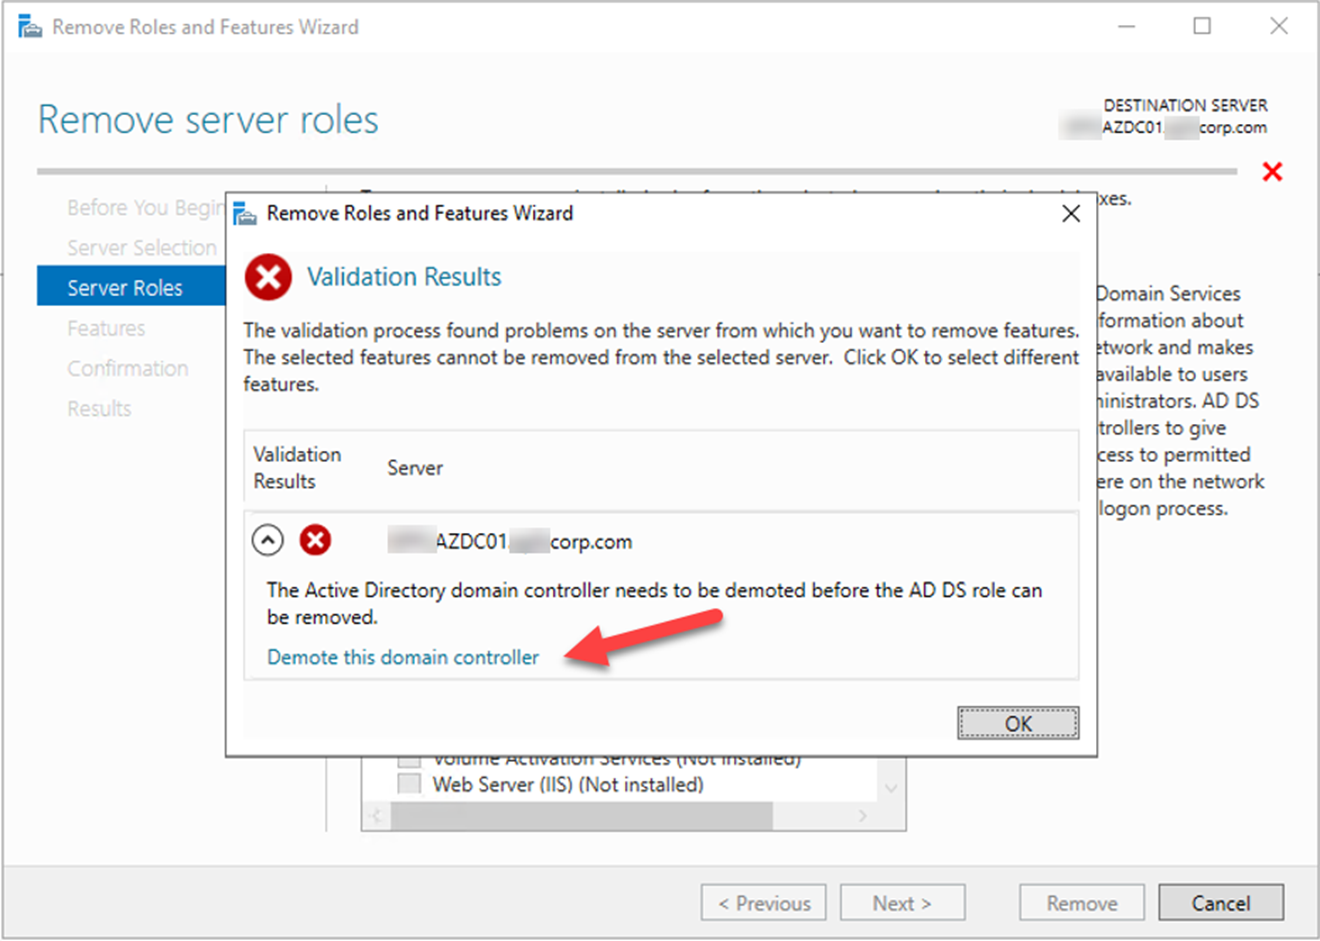 101120 0520 HowtoDemote11 - How to Demote Microsoft Windows Server 2019 Domain Controller Virtual Machine at Azure